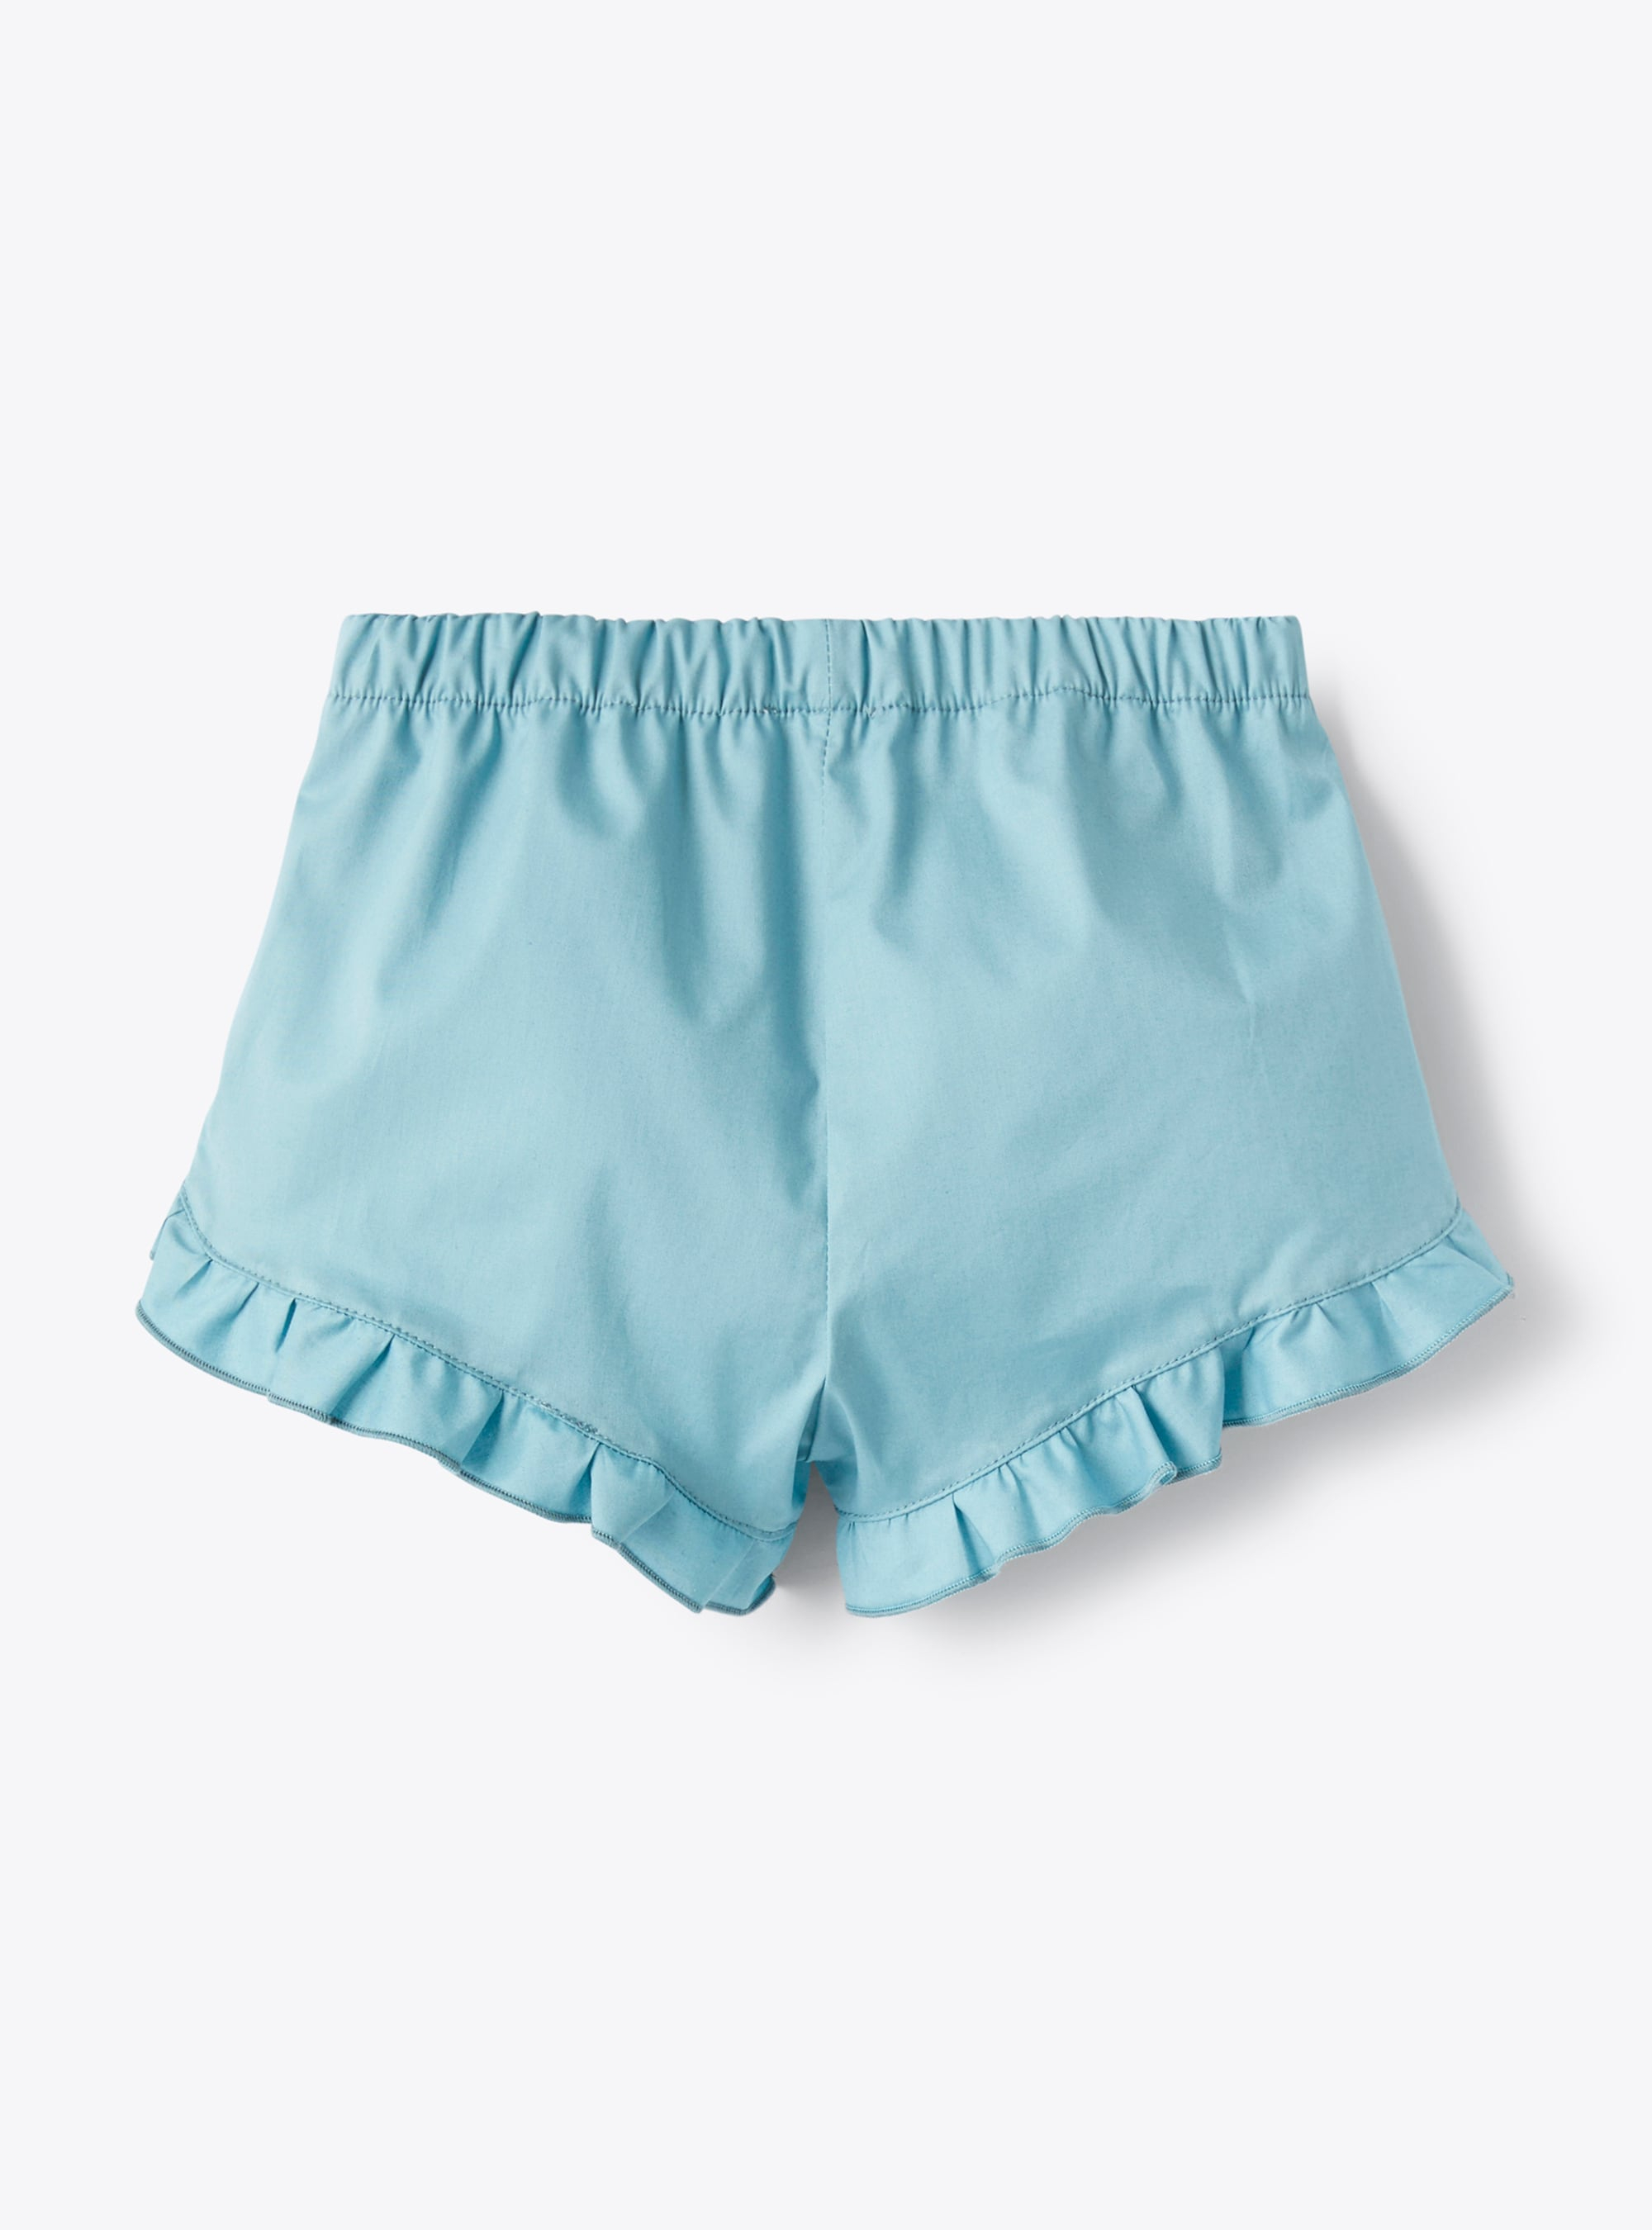 Shorts in stretch sea-green poplin - Light blue | Il Gufo